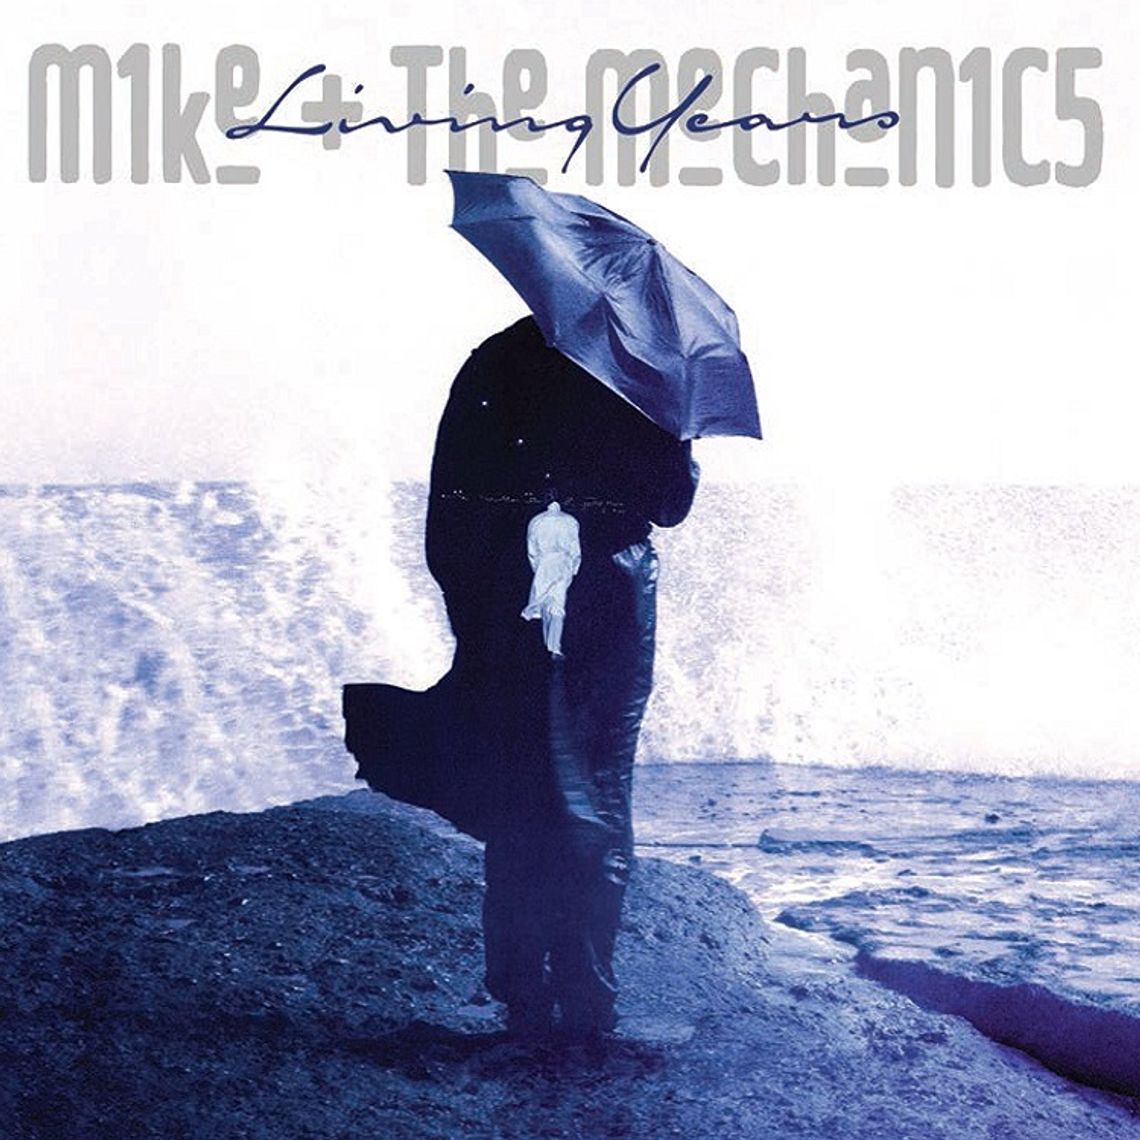 MIKE & THE MECHANICS "The living years"